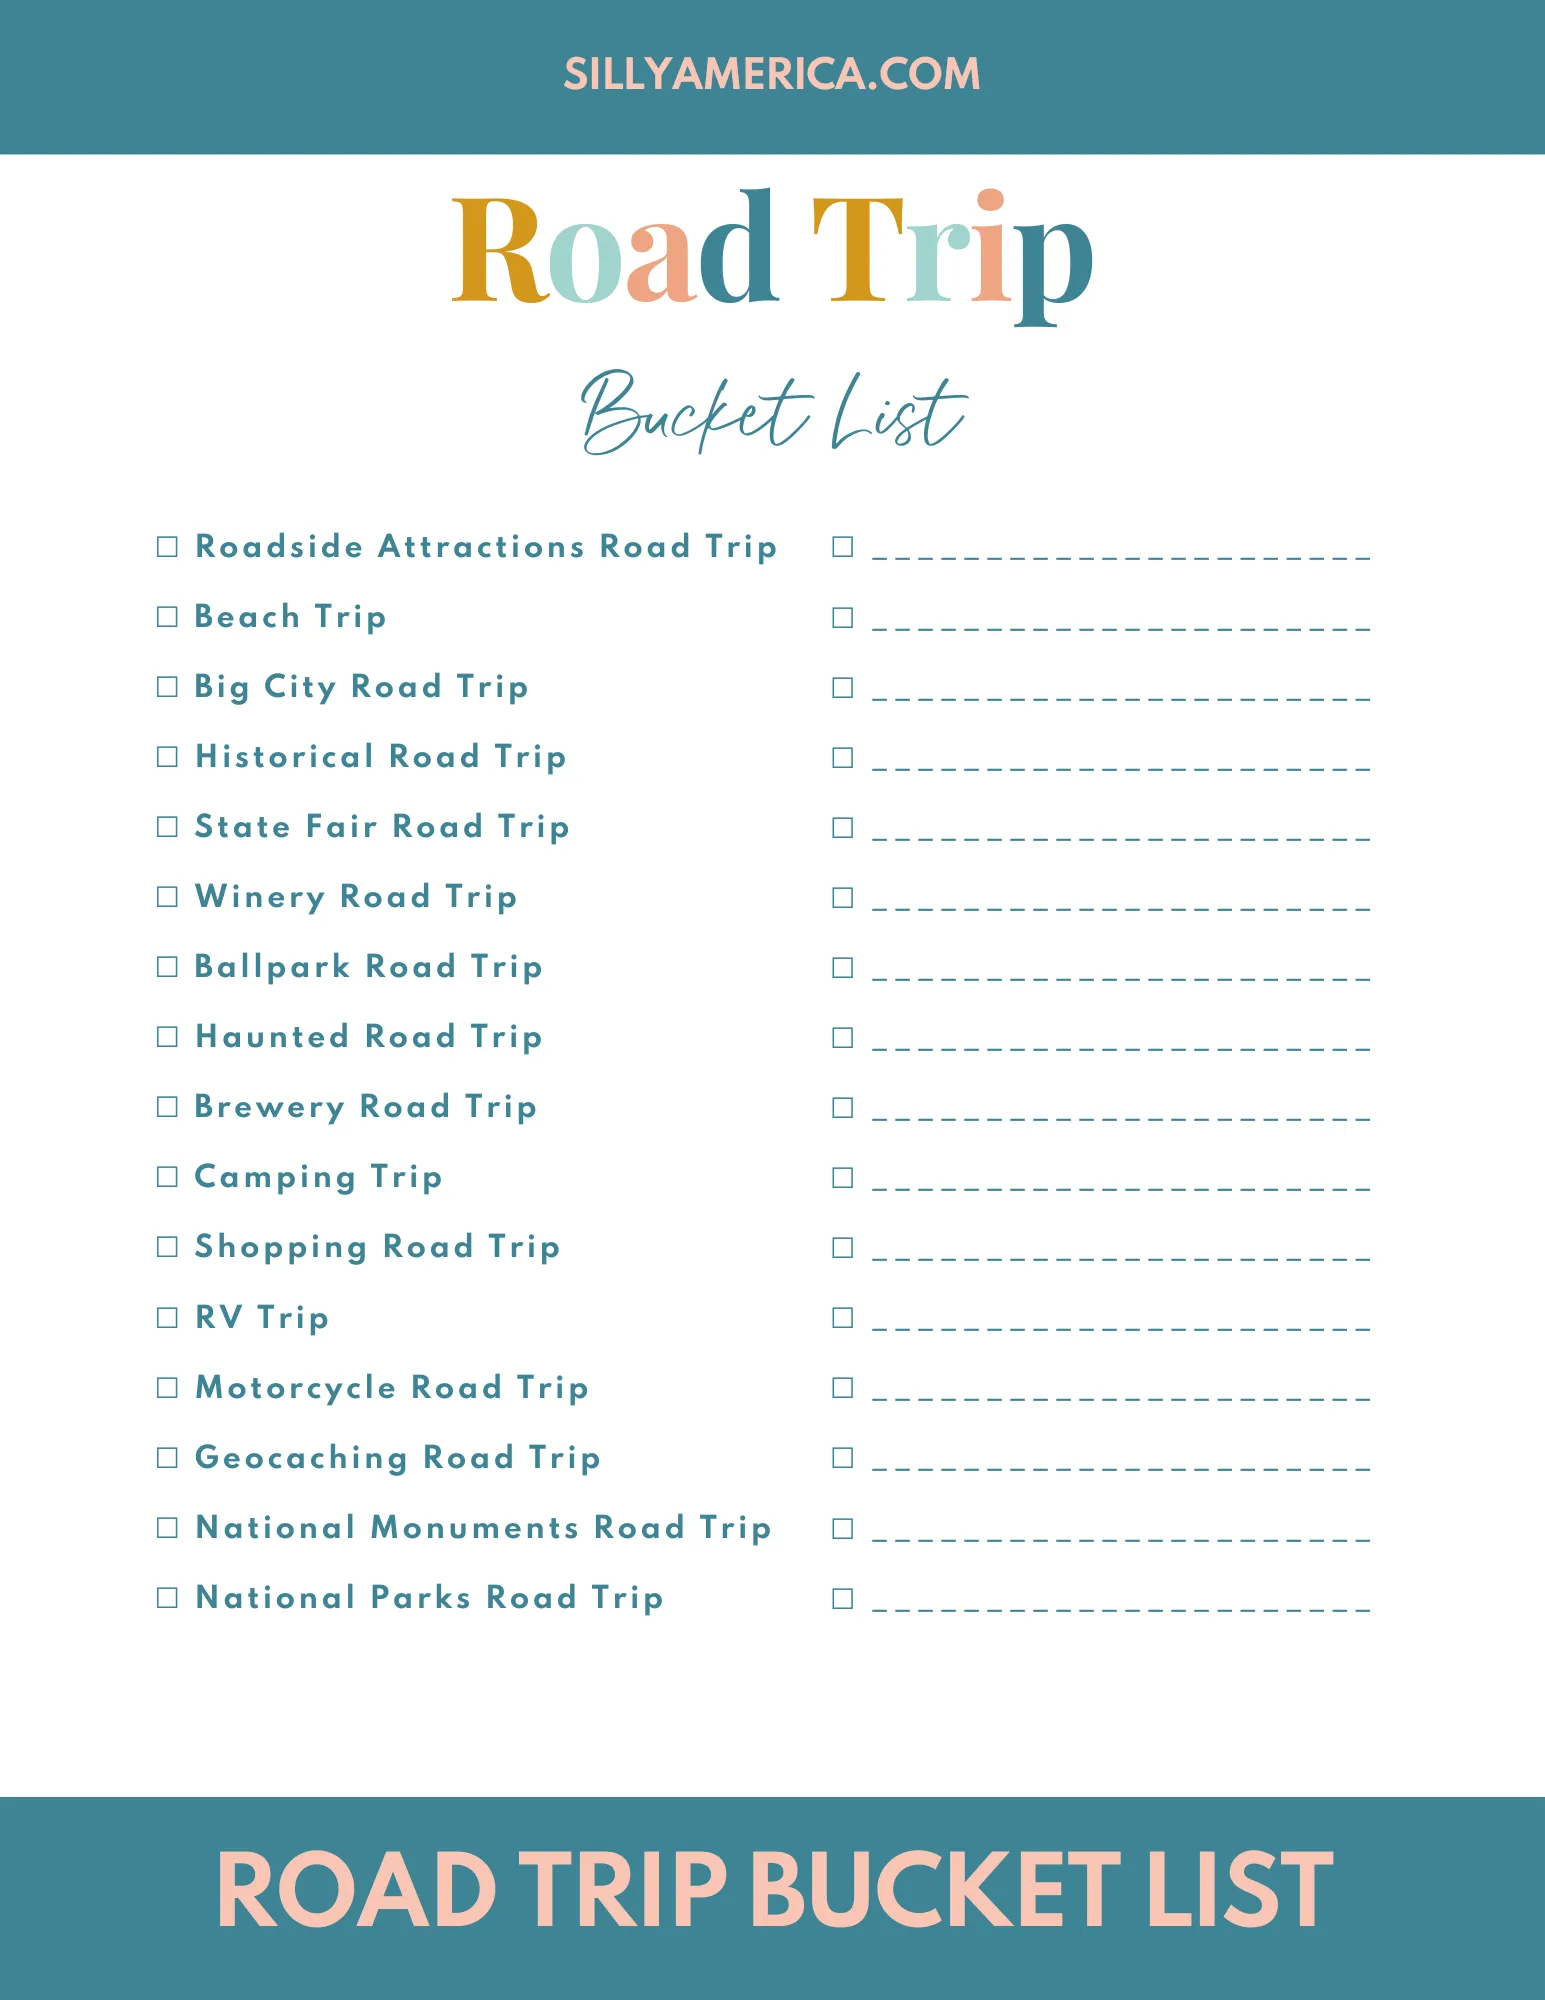 Road Trip Bucket List Ideas for travel